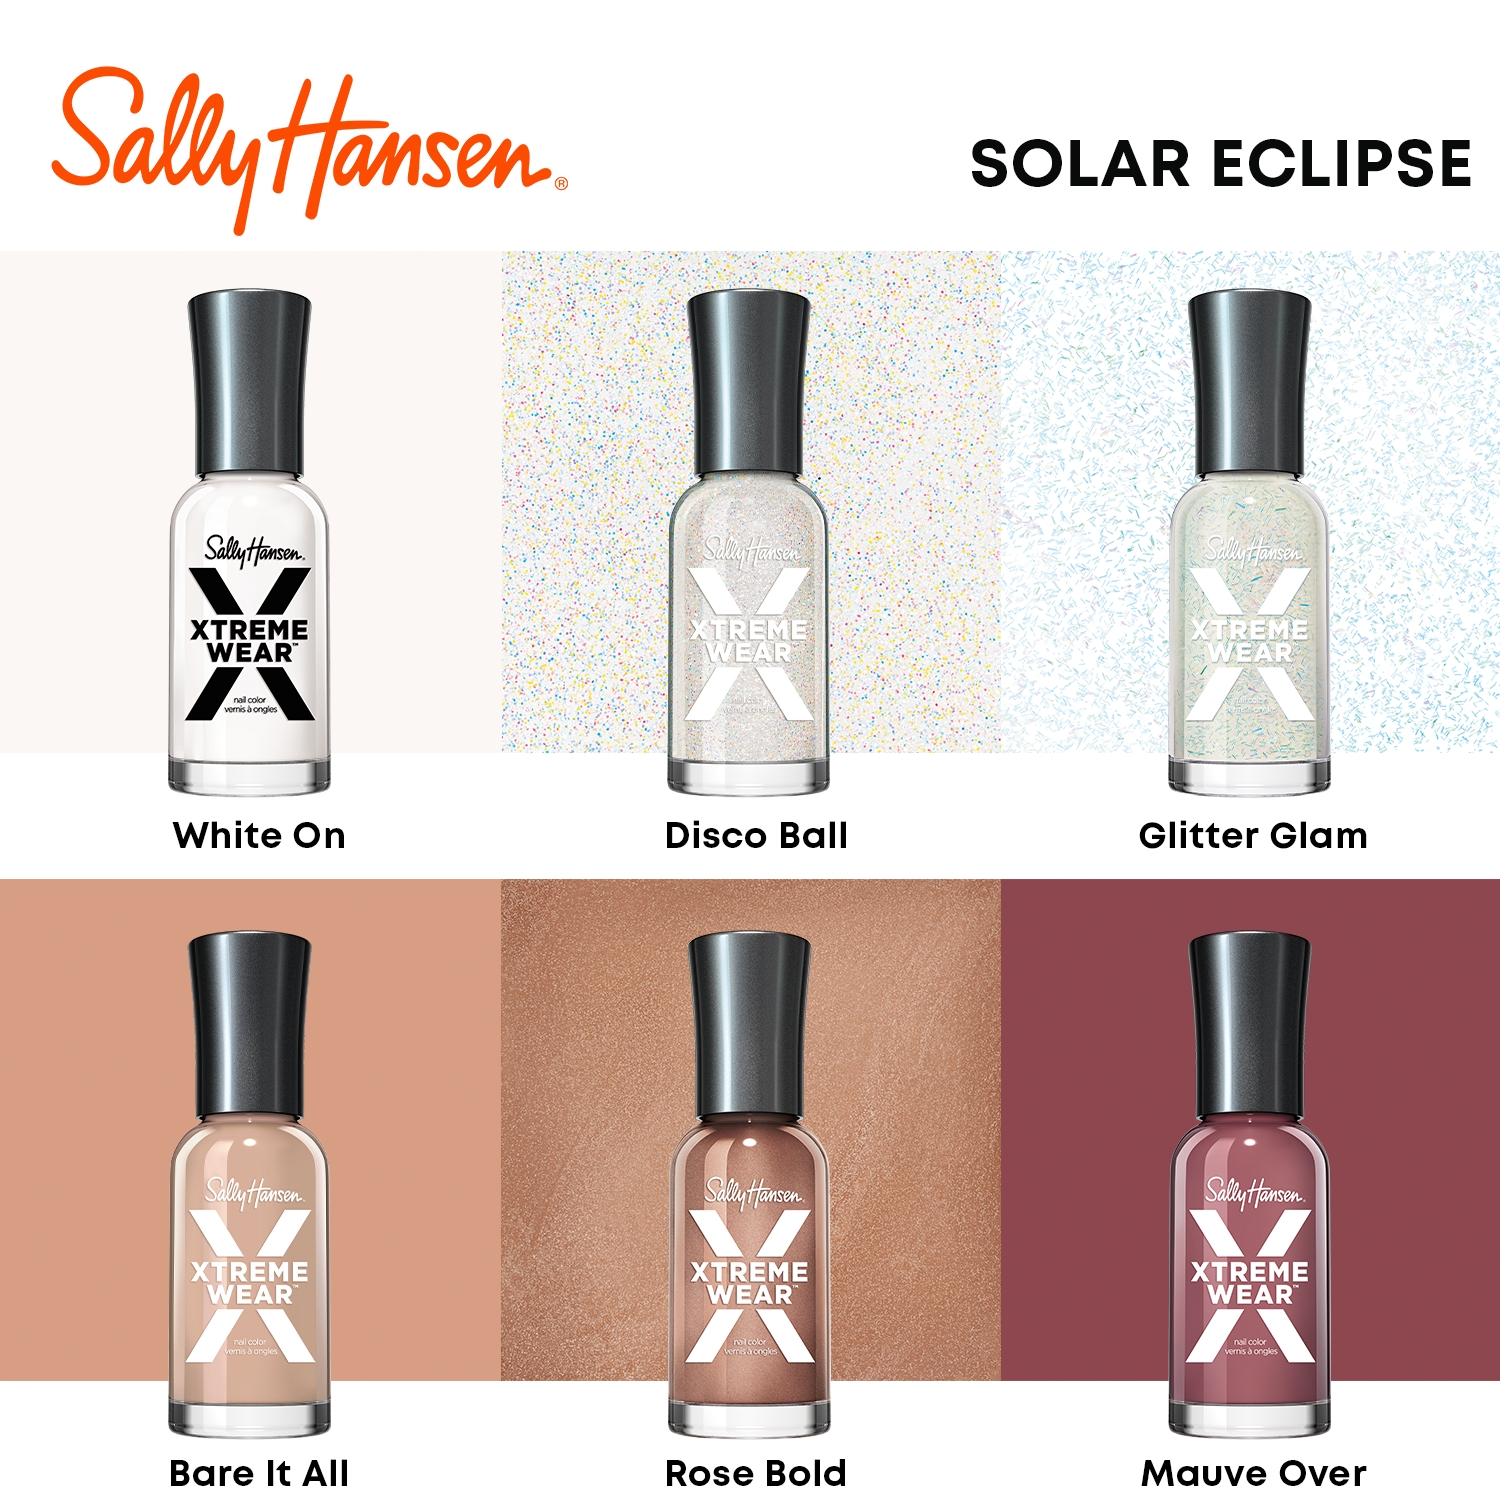 Sally Hansen Xtreme Wear Nail Color, Camle-ot, 0.4 oz, Color Nail Polish, Nail Polish, Quick Dry Nail Polish, Nail Polish Colors, Chip Resistant, Bold Color - image 6 of 14